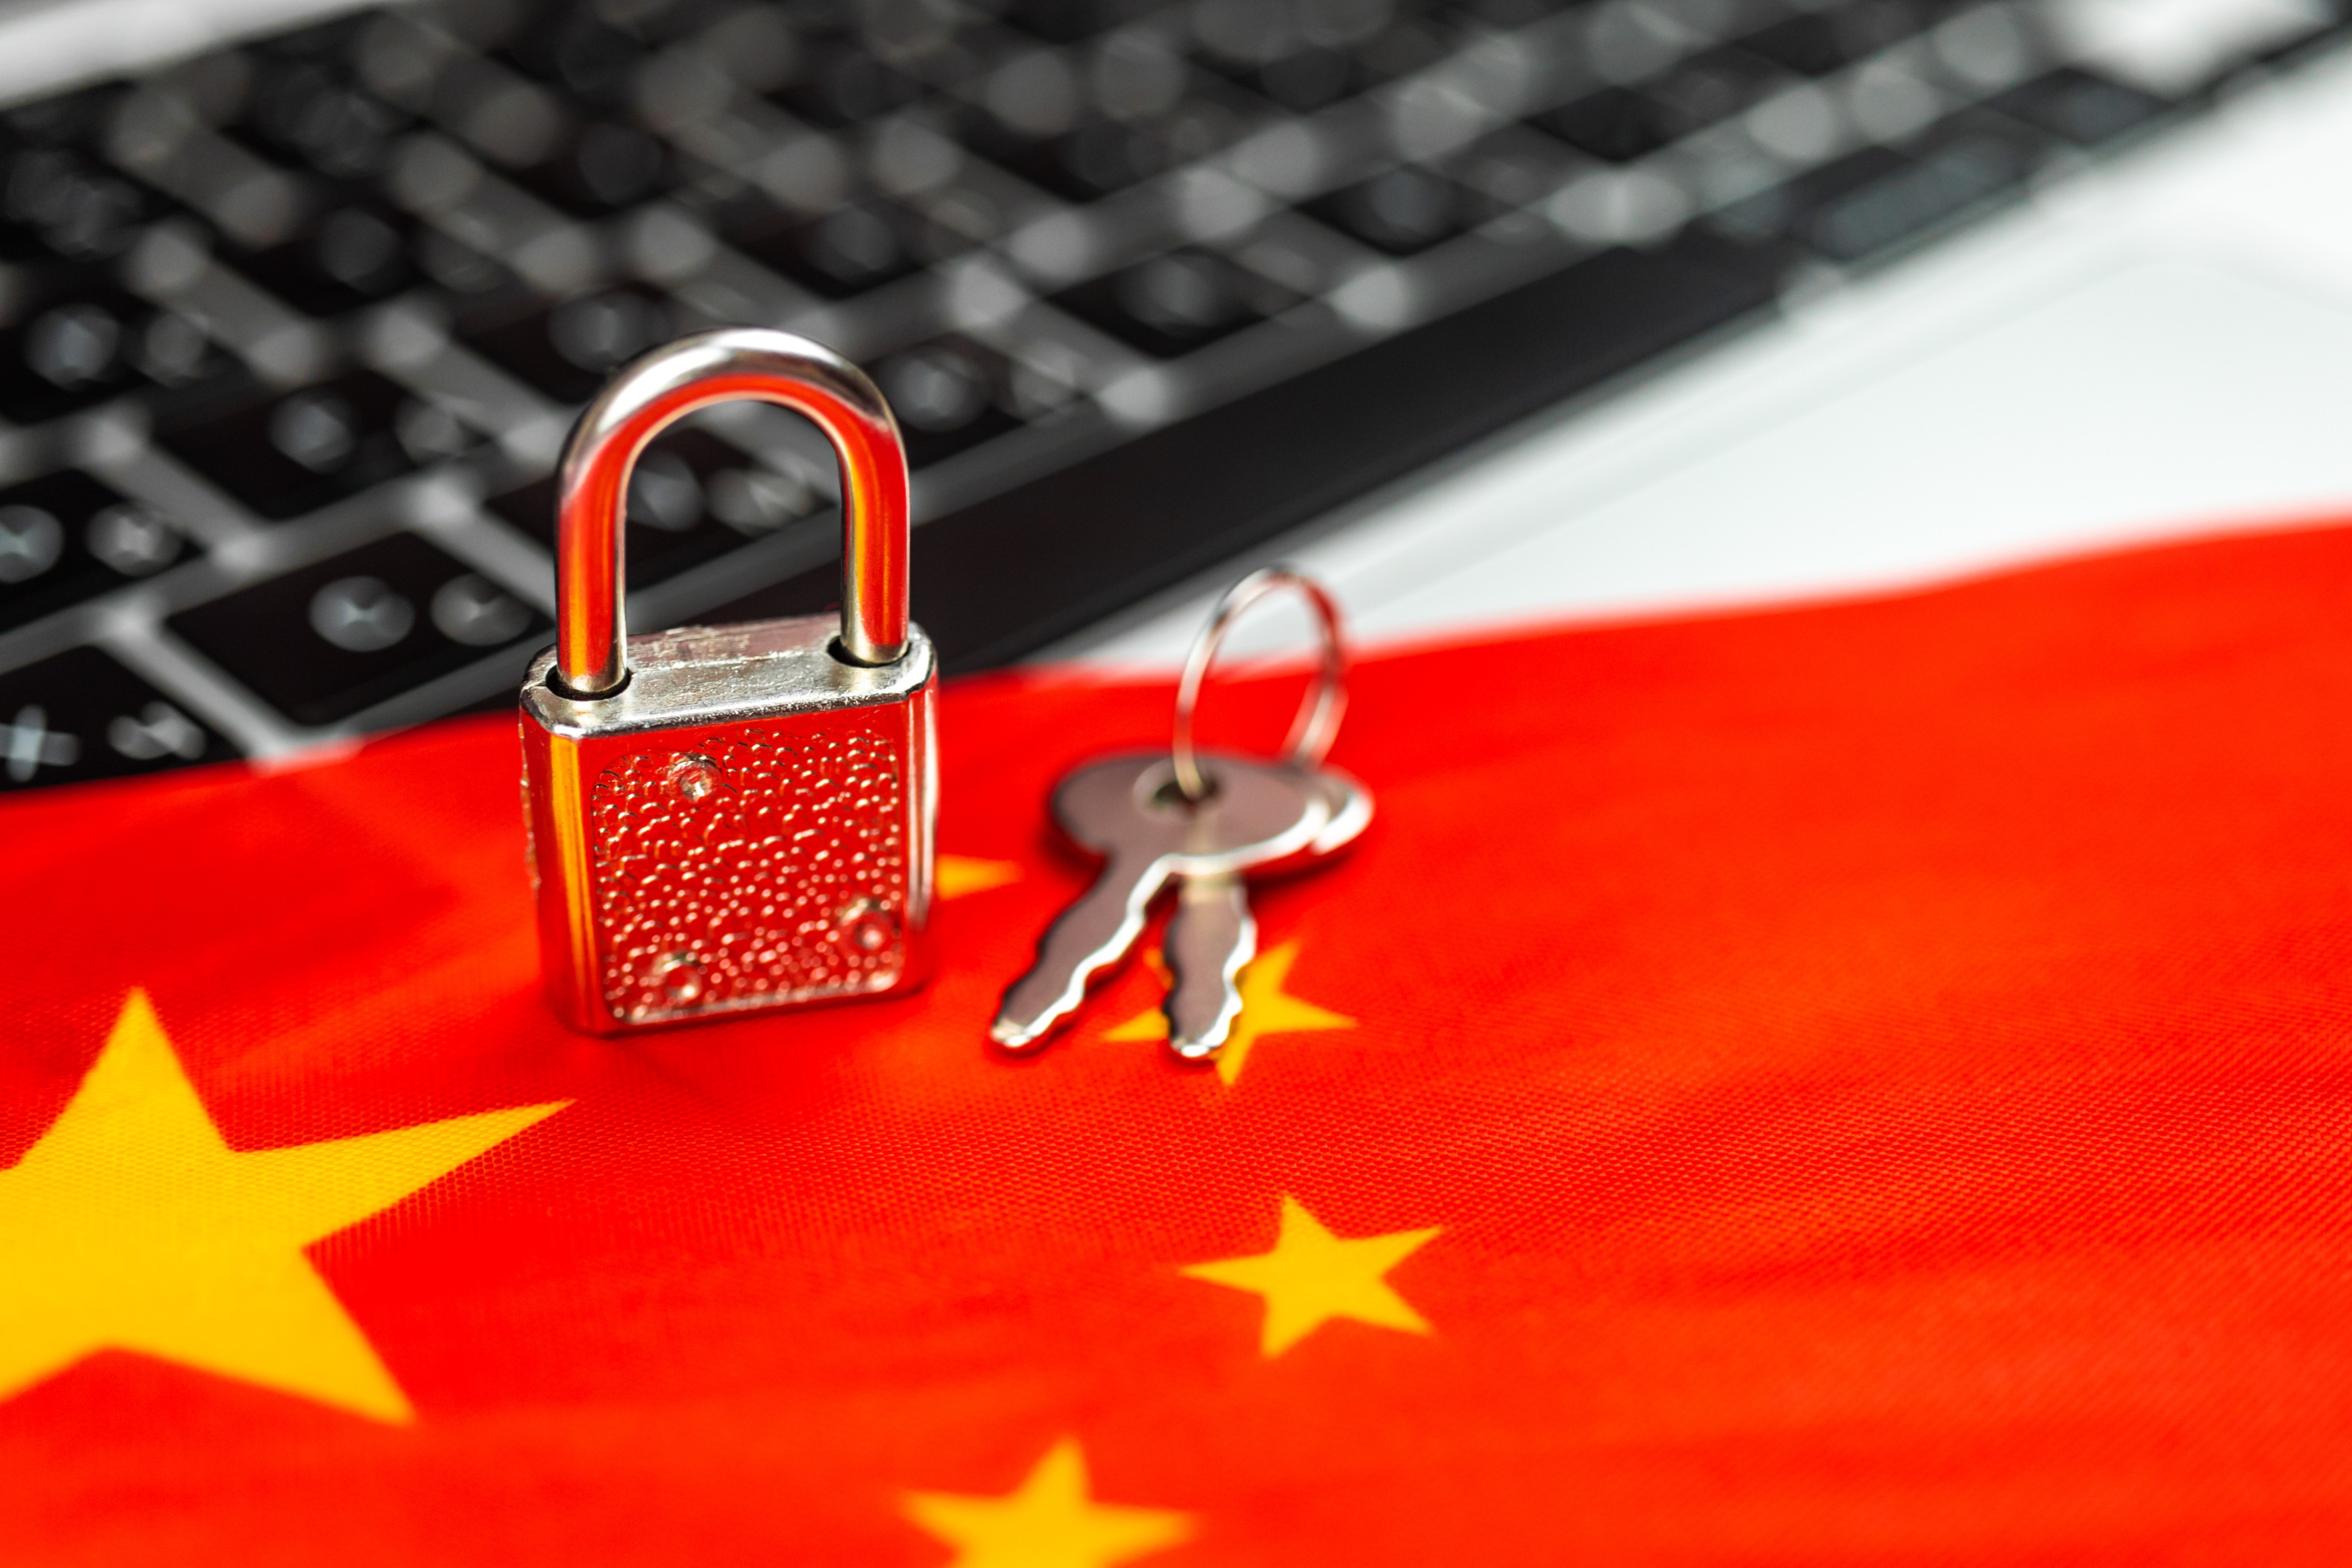 China bans letter N, Internet Censorship in China